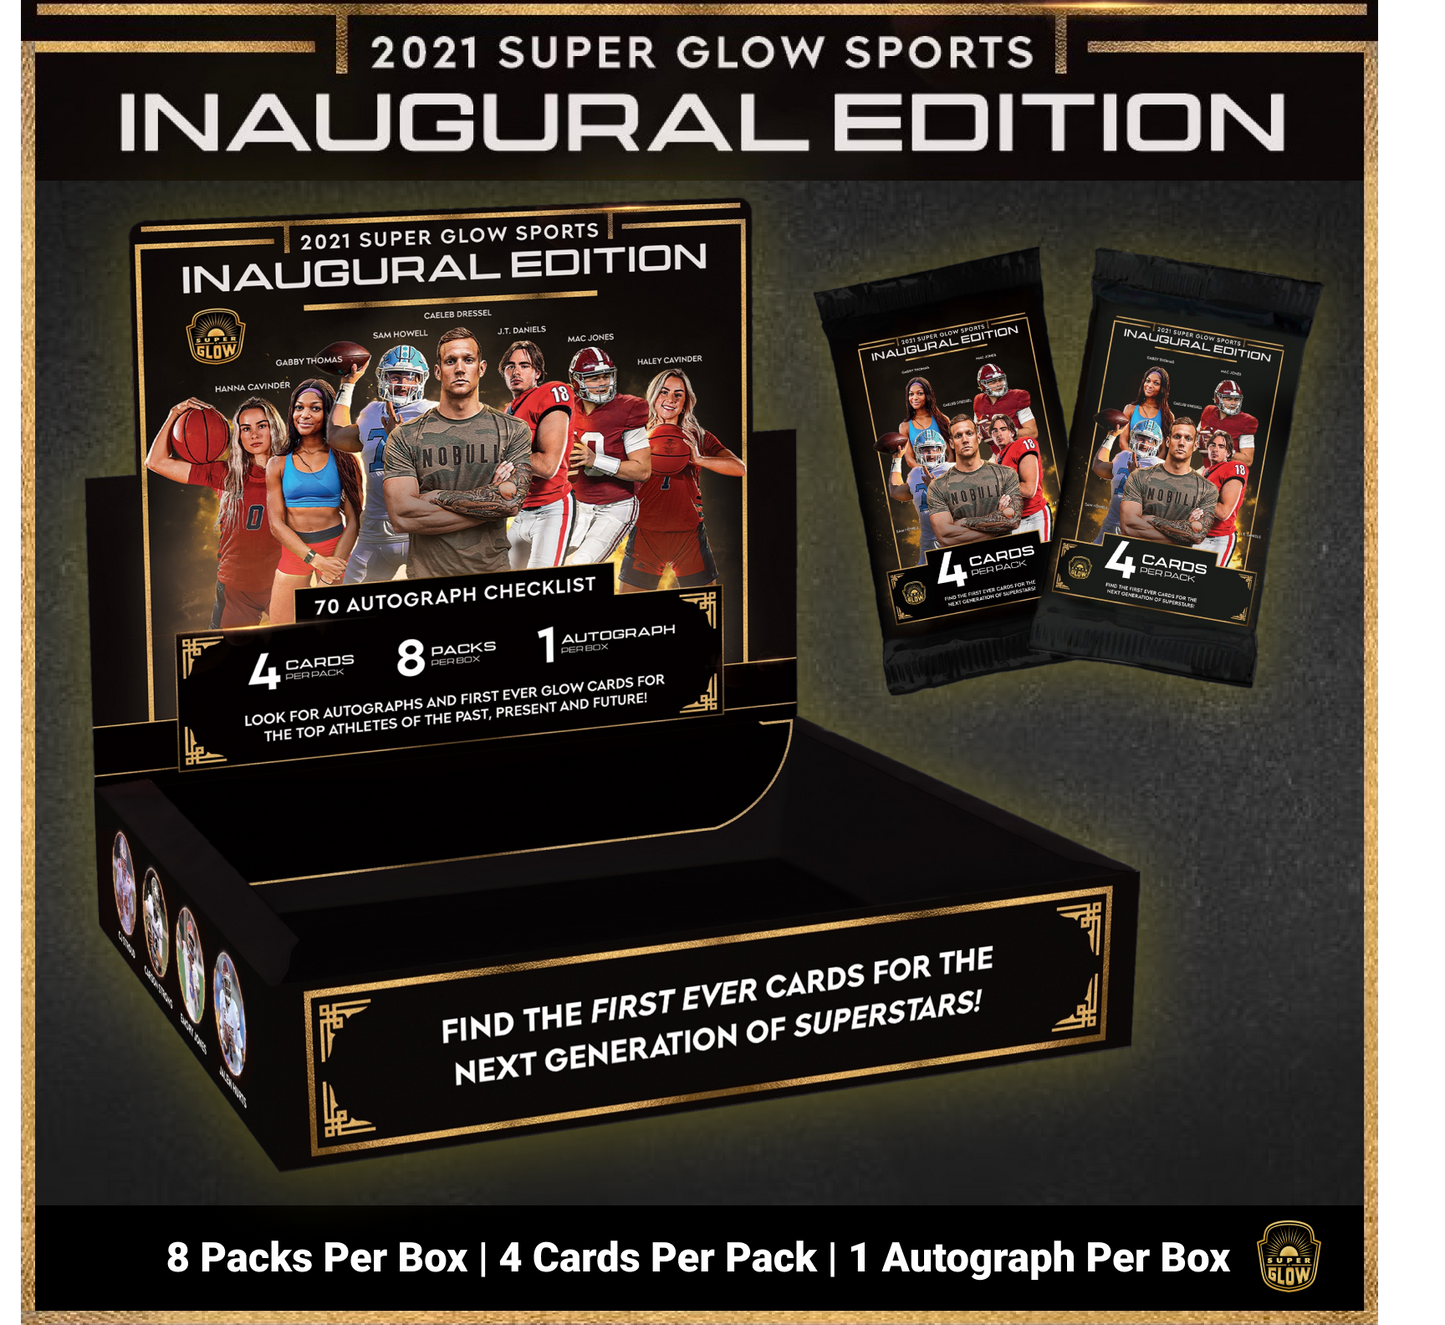 2021 Super Glow Sports Inaugural Edition [Box]